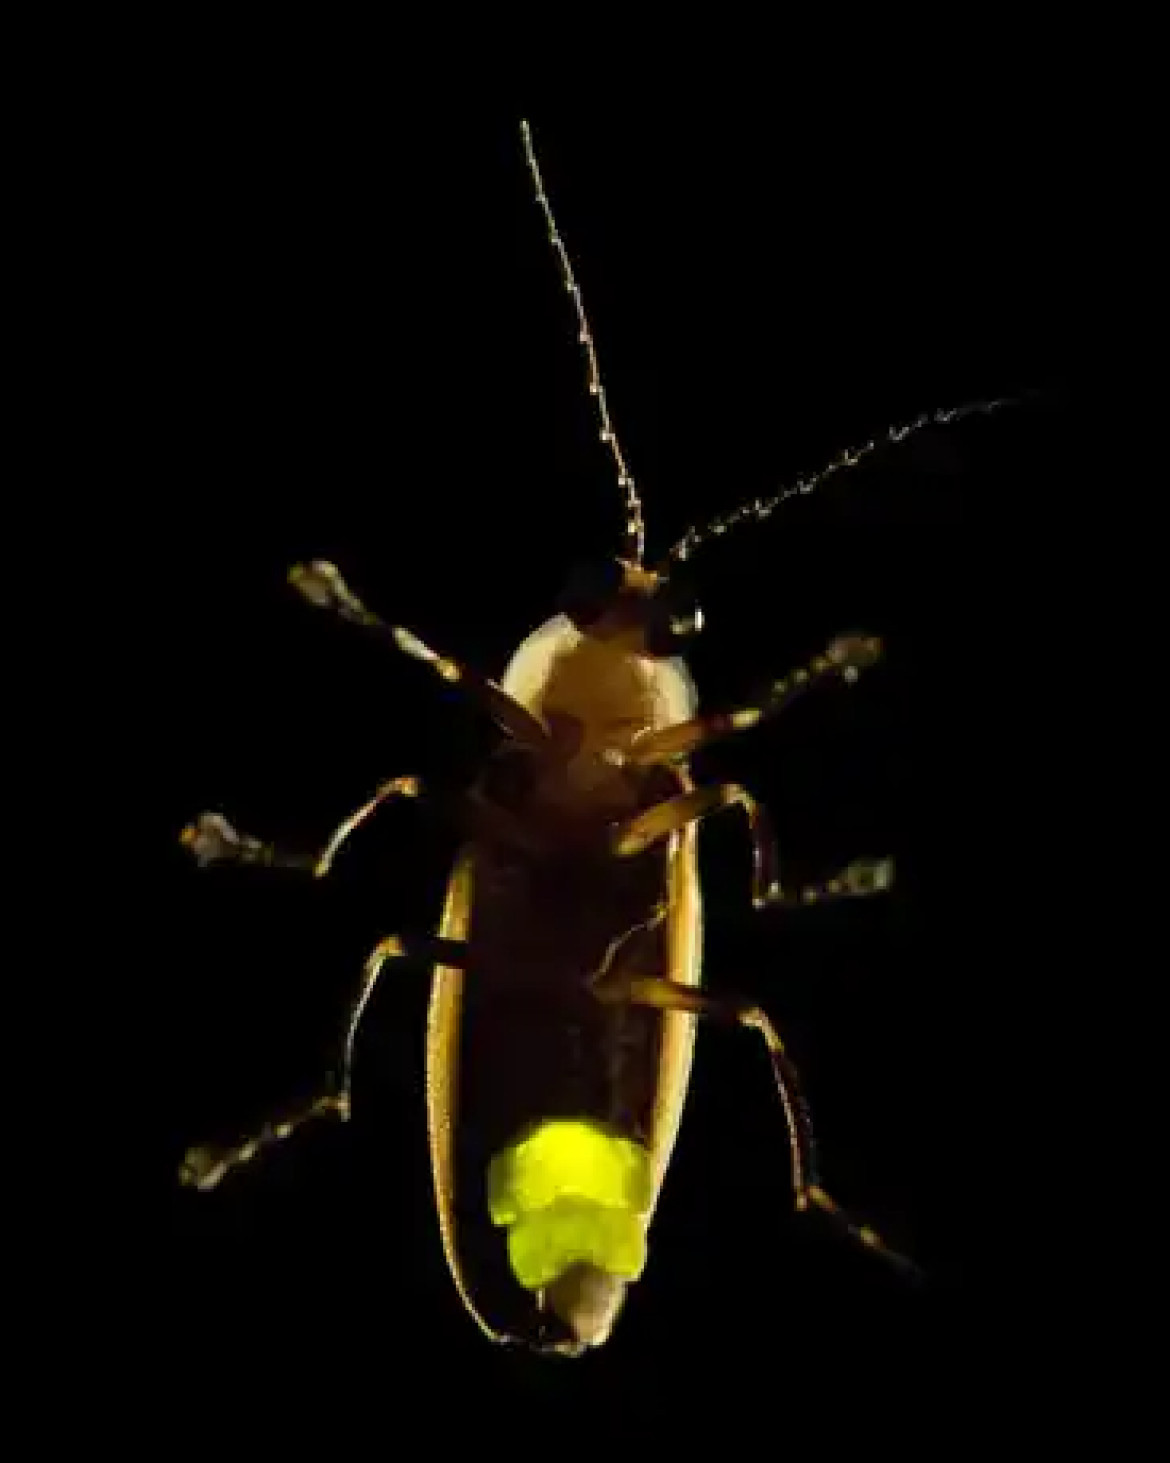 Una especie de luciérnaga bioluminiscente, Photuris quadrifulgens, fotografiada en el río Holston, Tennessee. Fuente: National Geographic